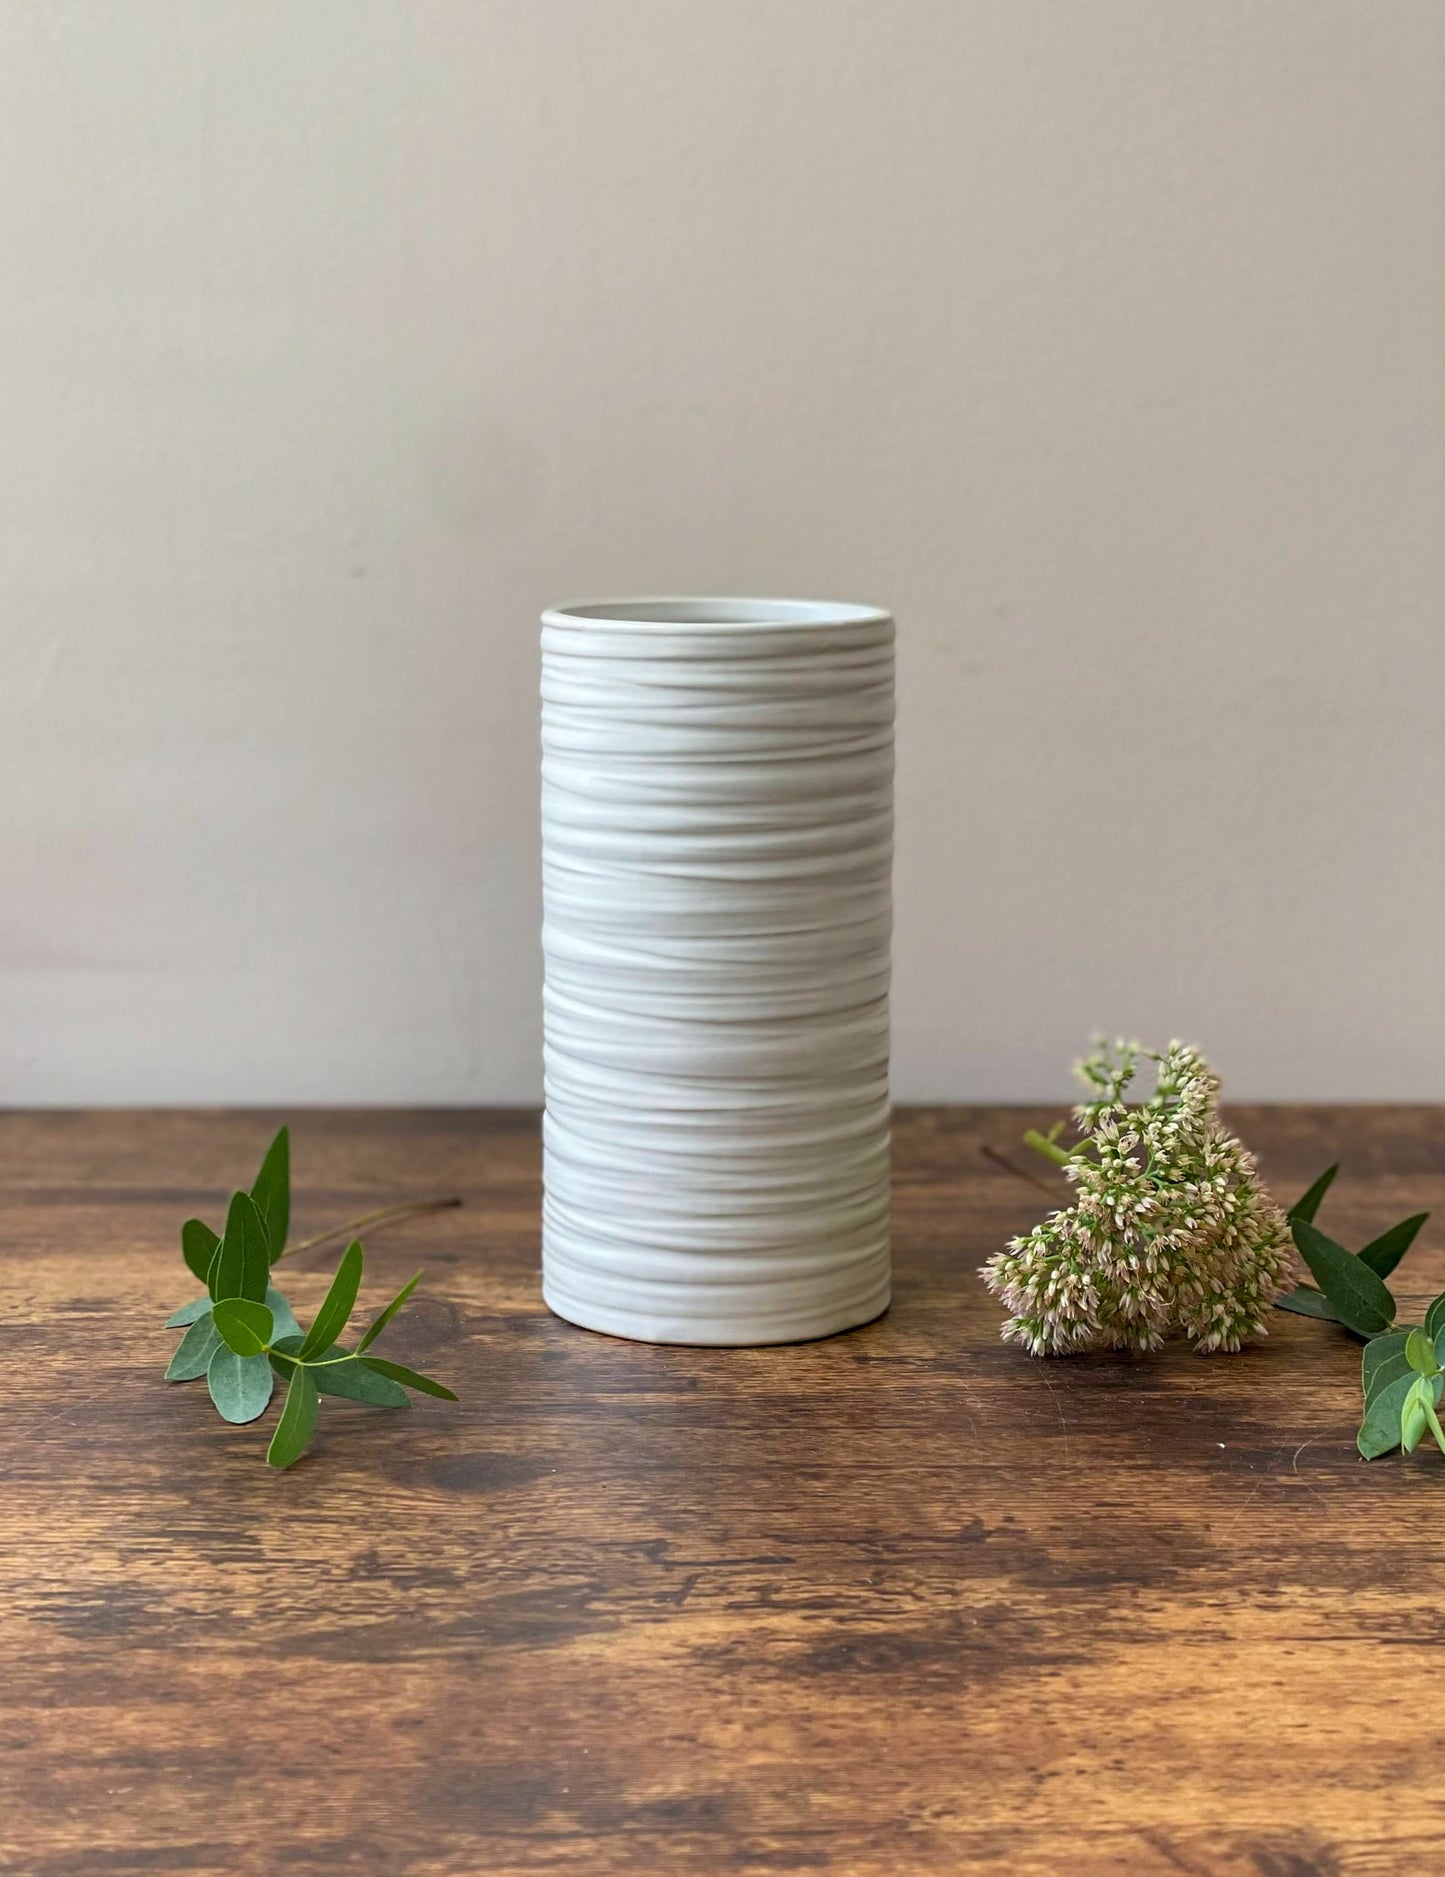 Valentine's Day - Medium Vase Arrangement